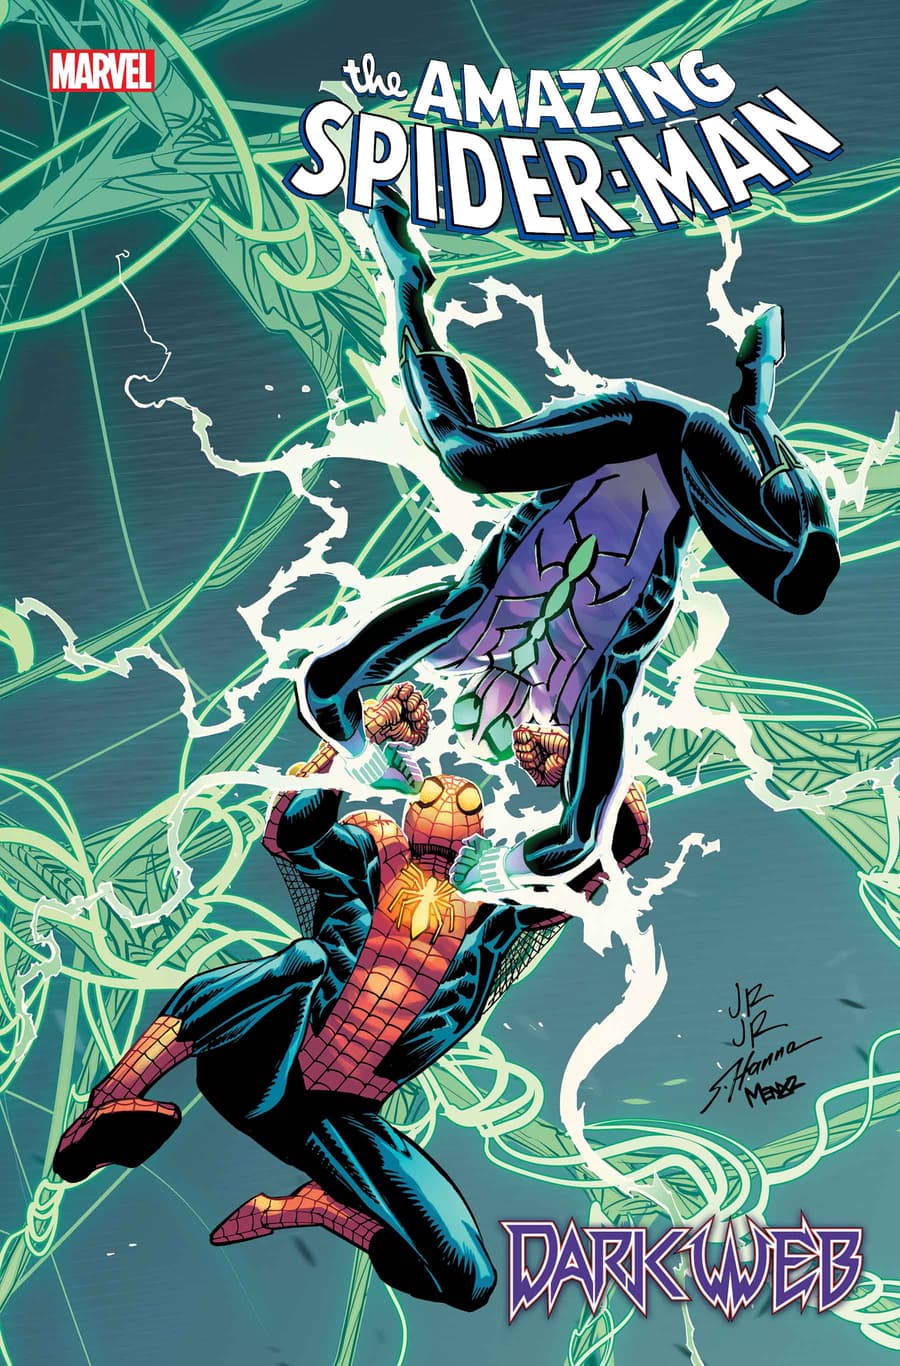 Amazing Spider-Man #16 Cover by JOHN ROMITA JR.